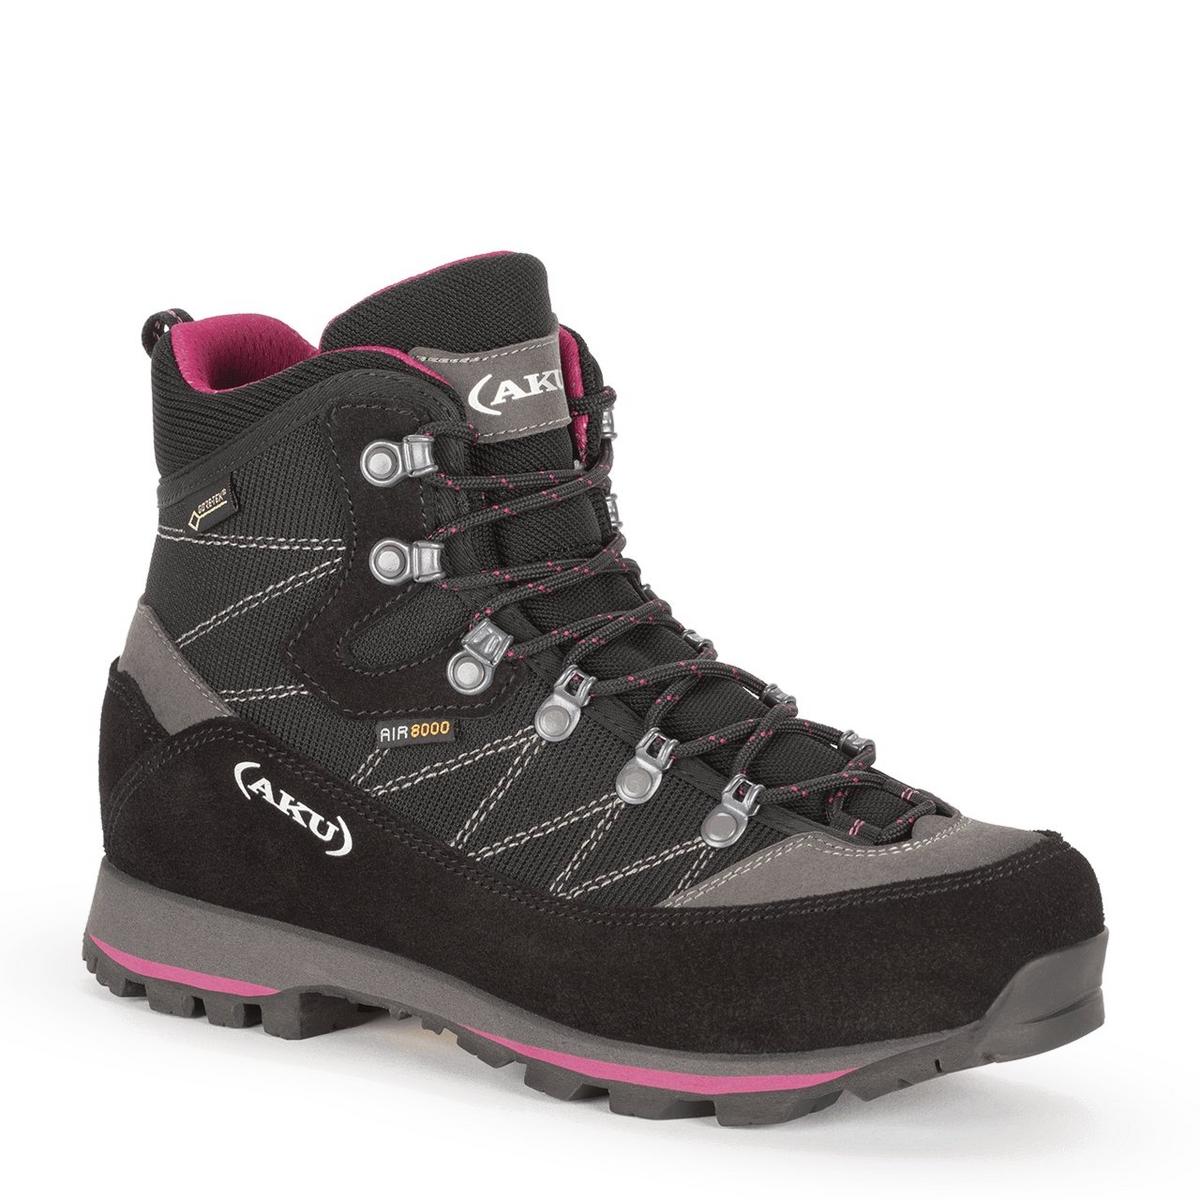 AKU Women's Trekker Lite 3 Gore-Tex Hiking Boots - Pink